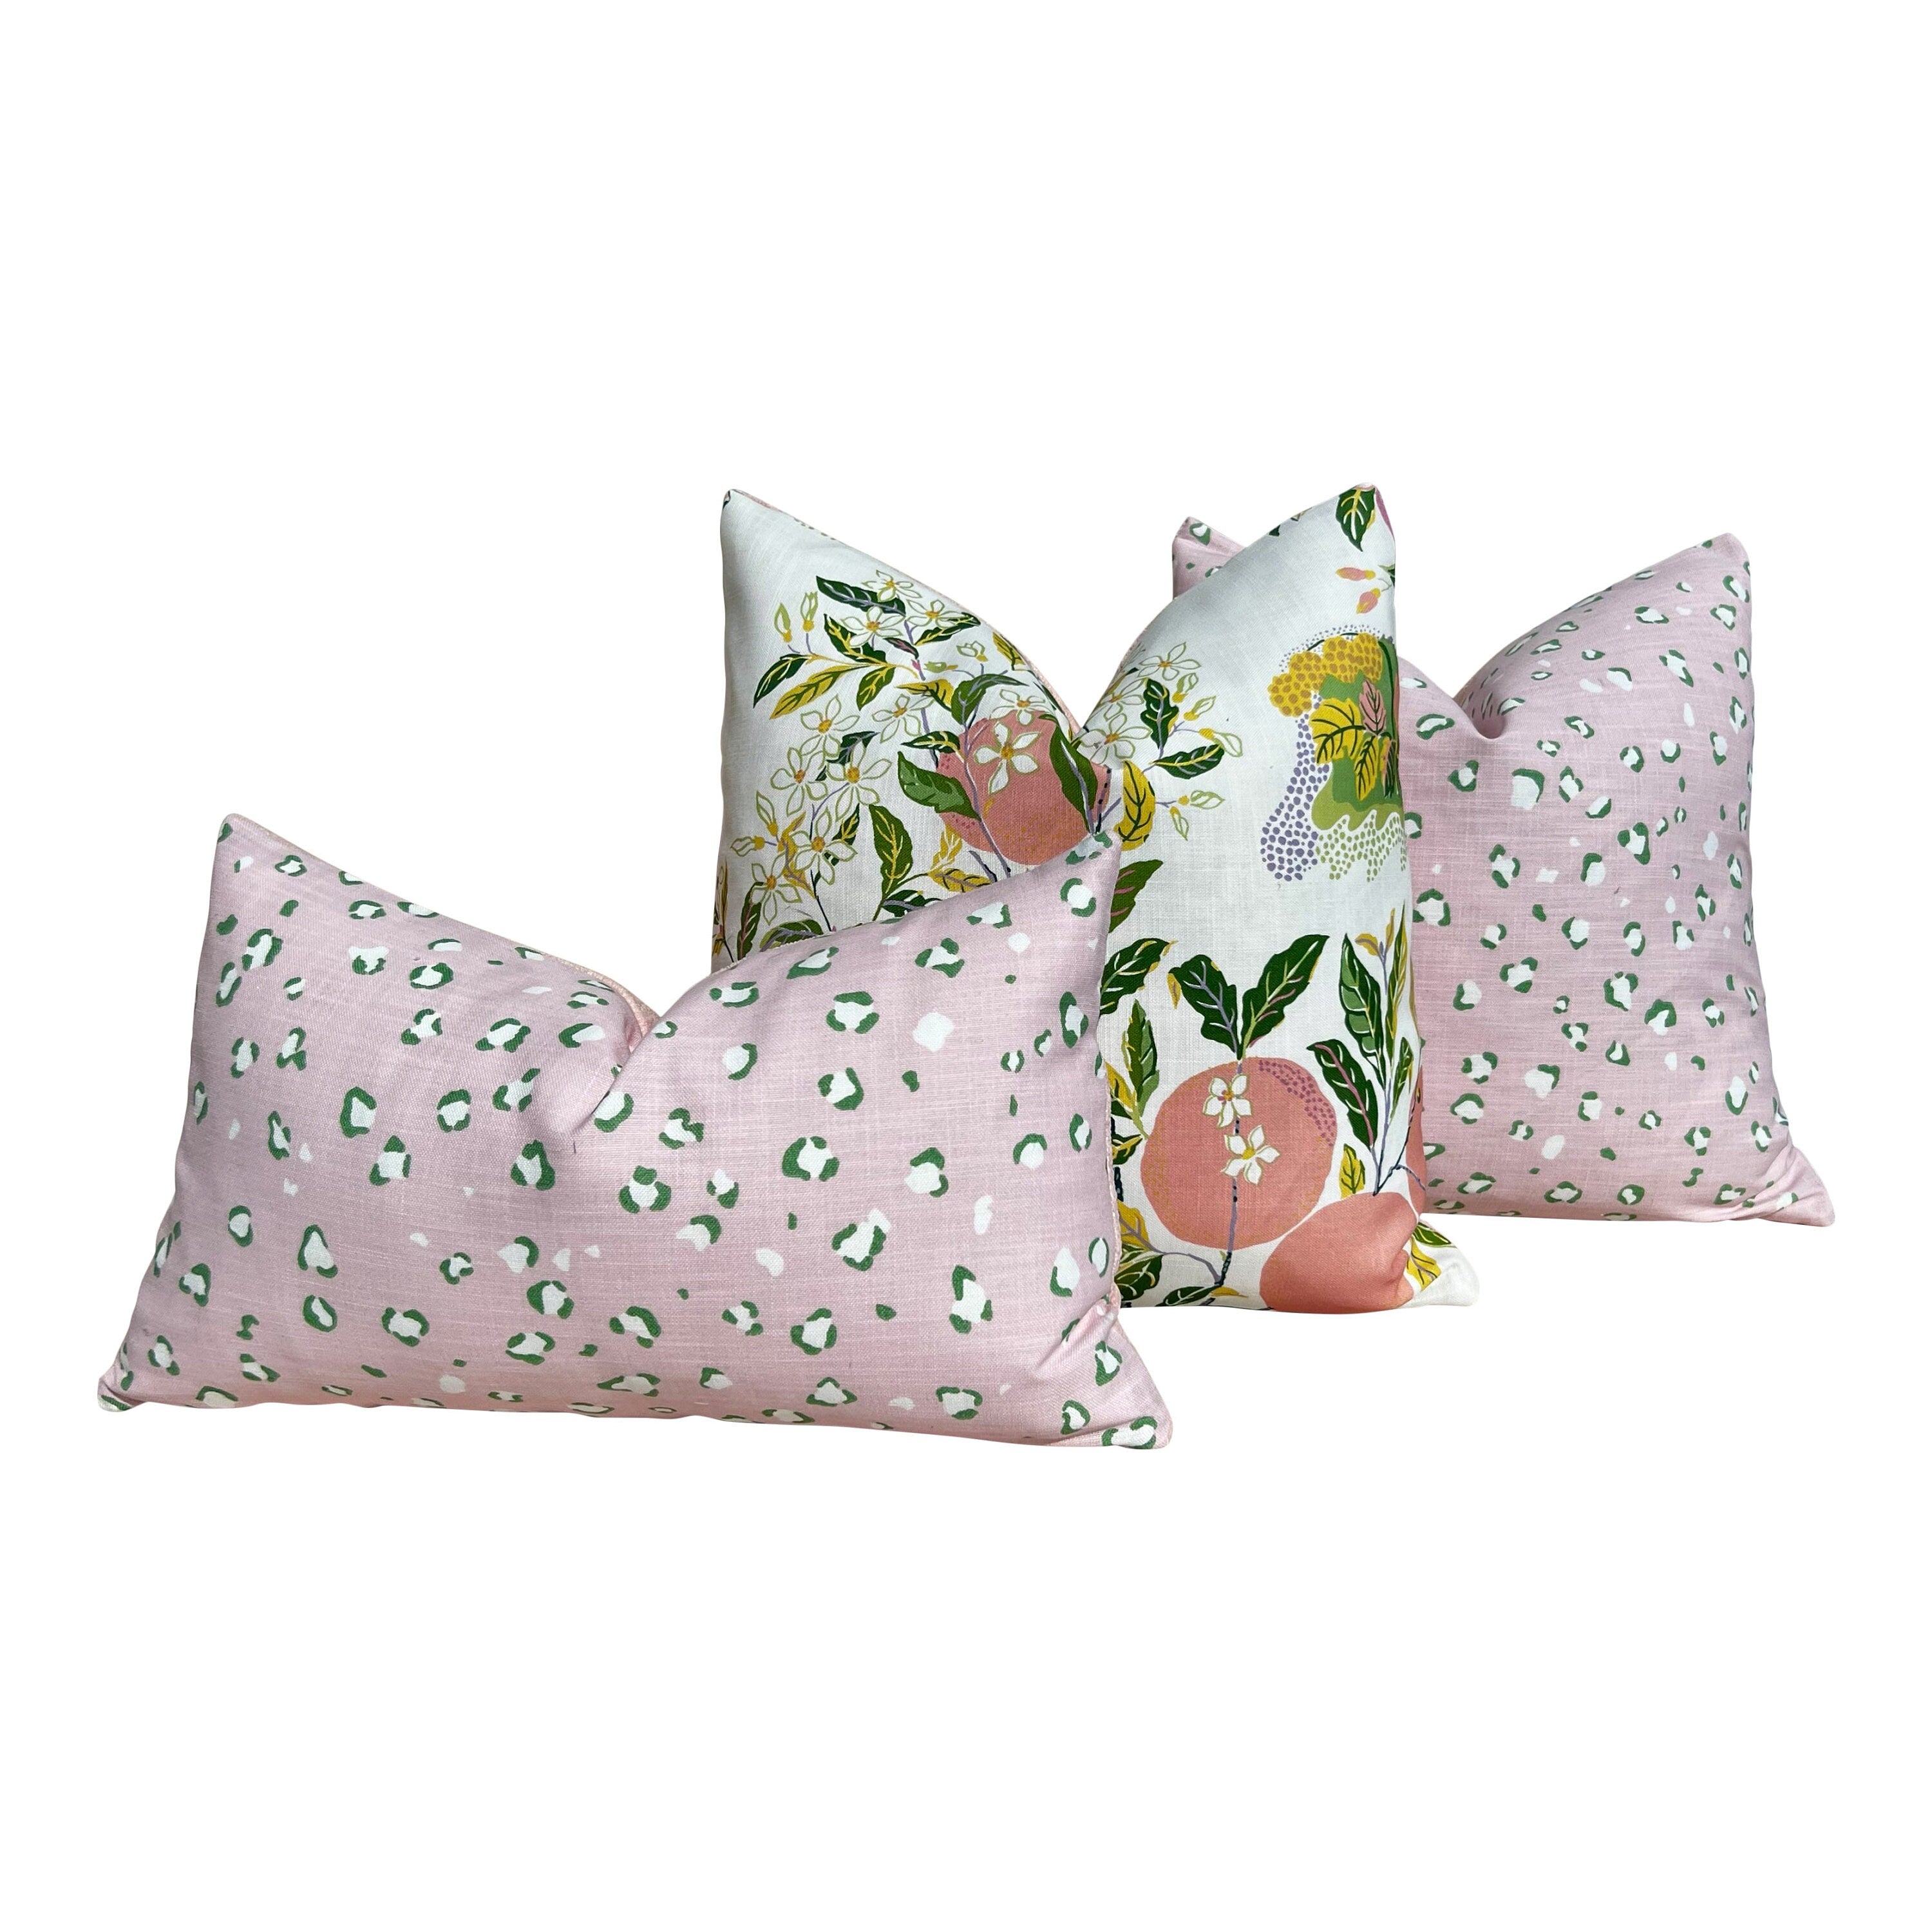 Indoor/Outdoor Schumacher Wild At Heart Pillow in Pink. Decorative lumbar Pillow, Designer Cushion Cover, Accent Pillow, Outdoor Pillow